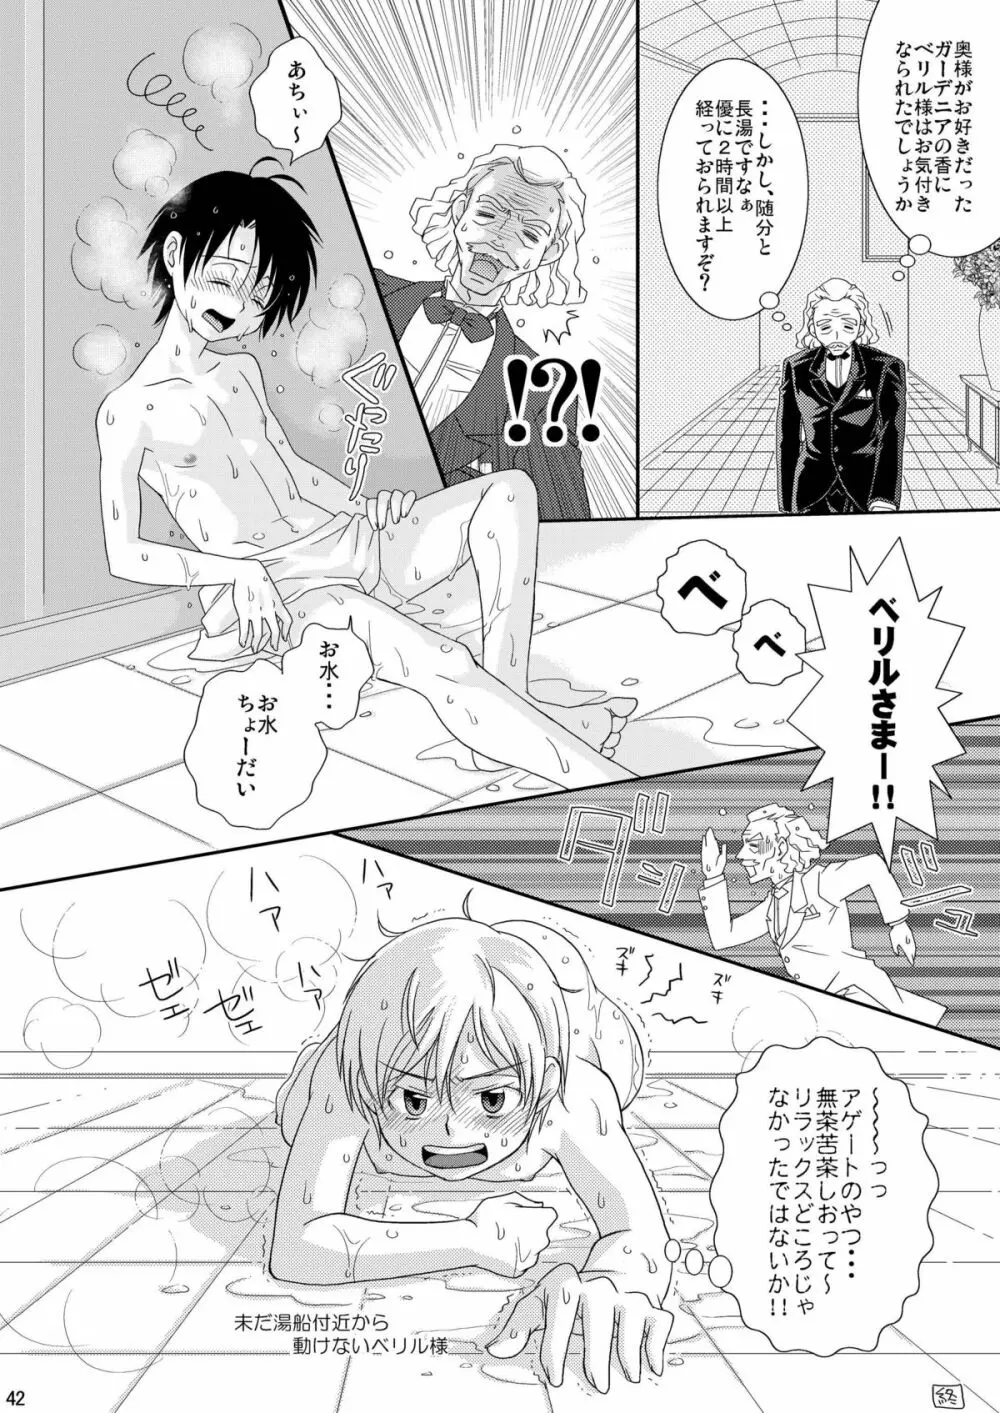 Re: ぷれい2 - page42